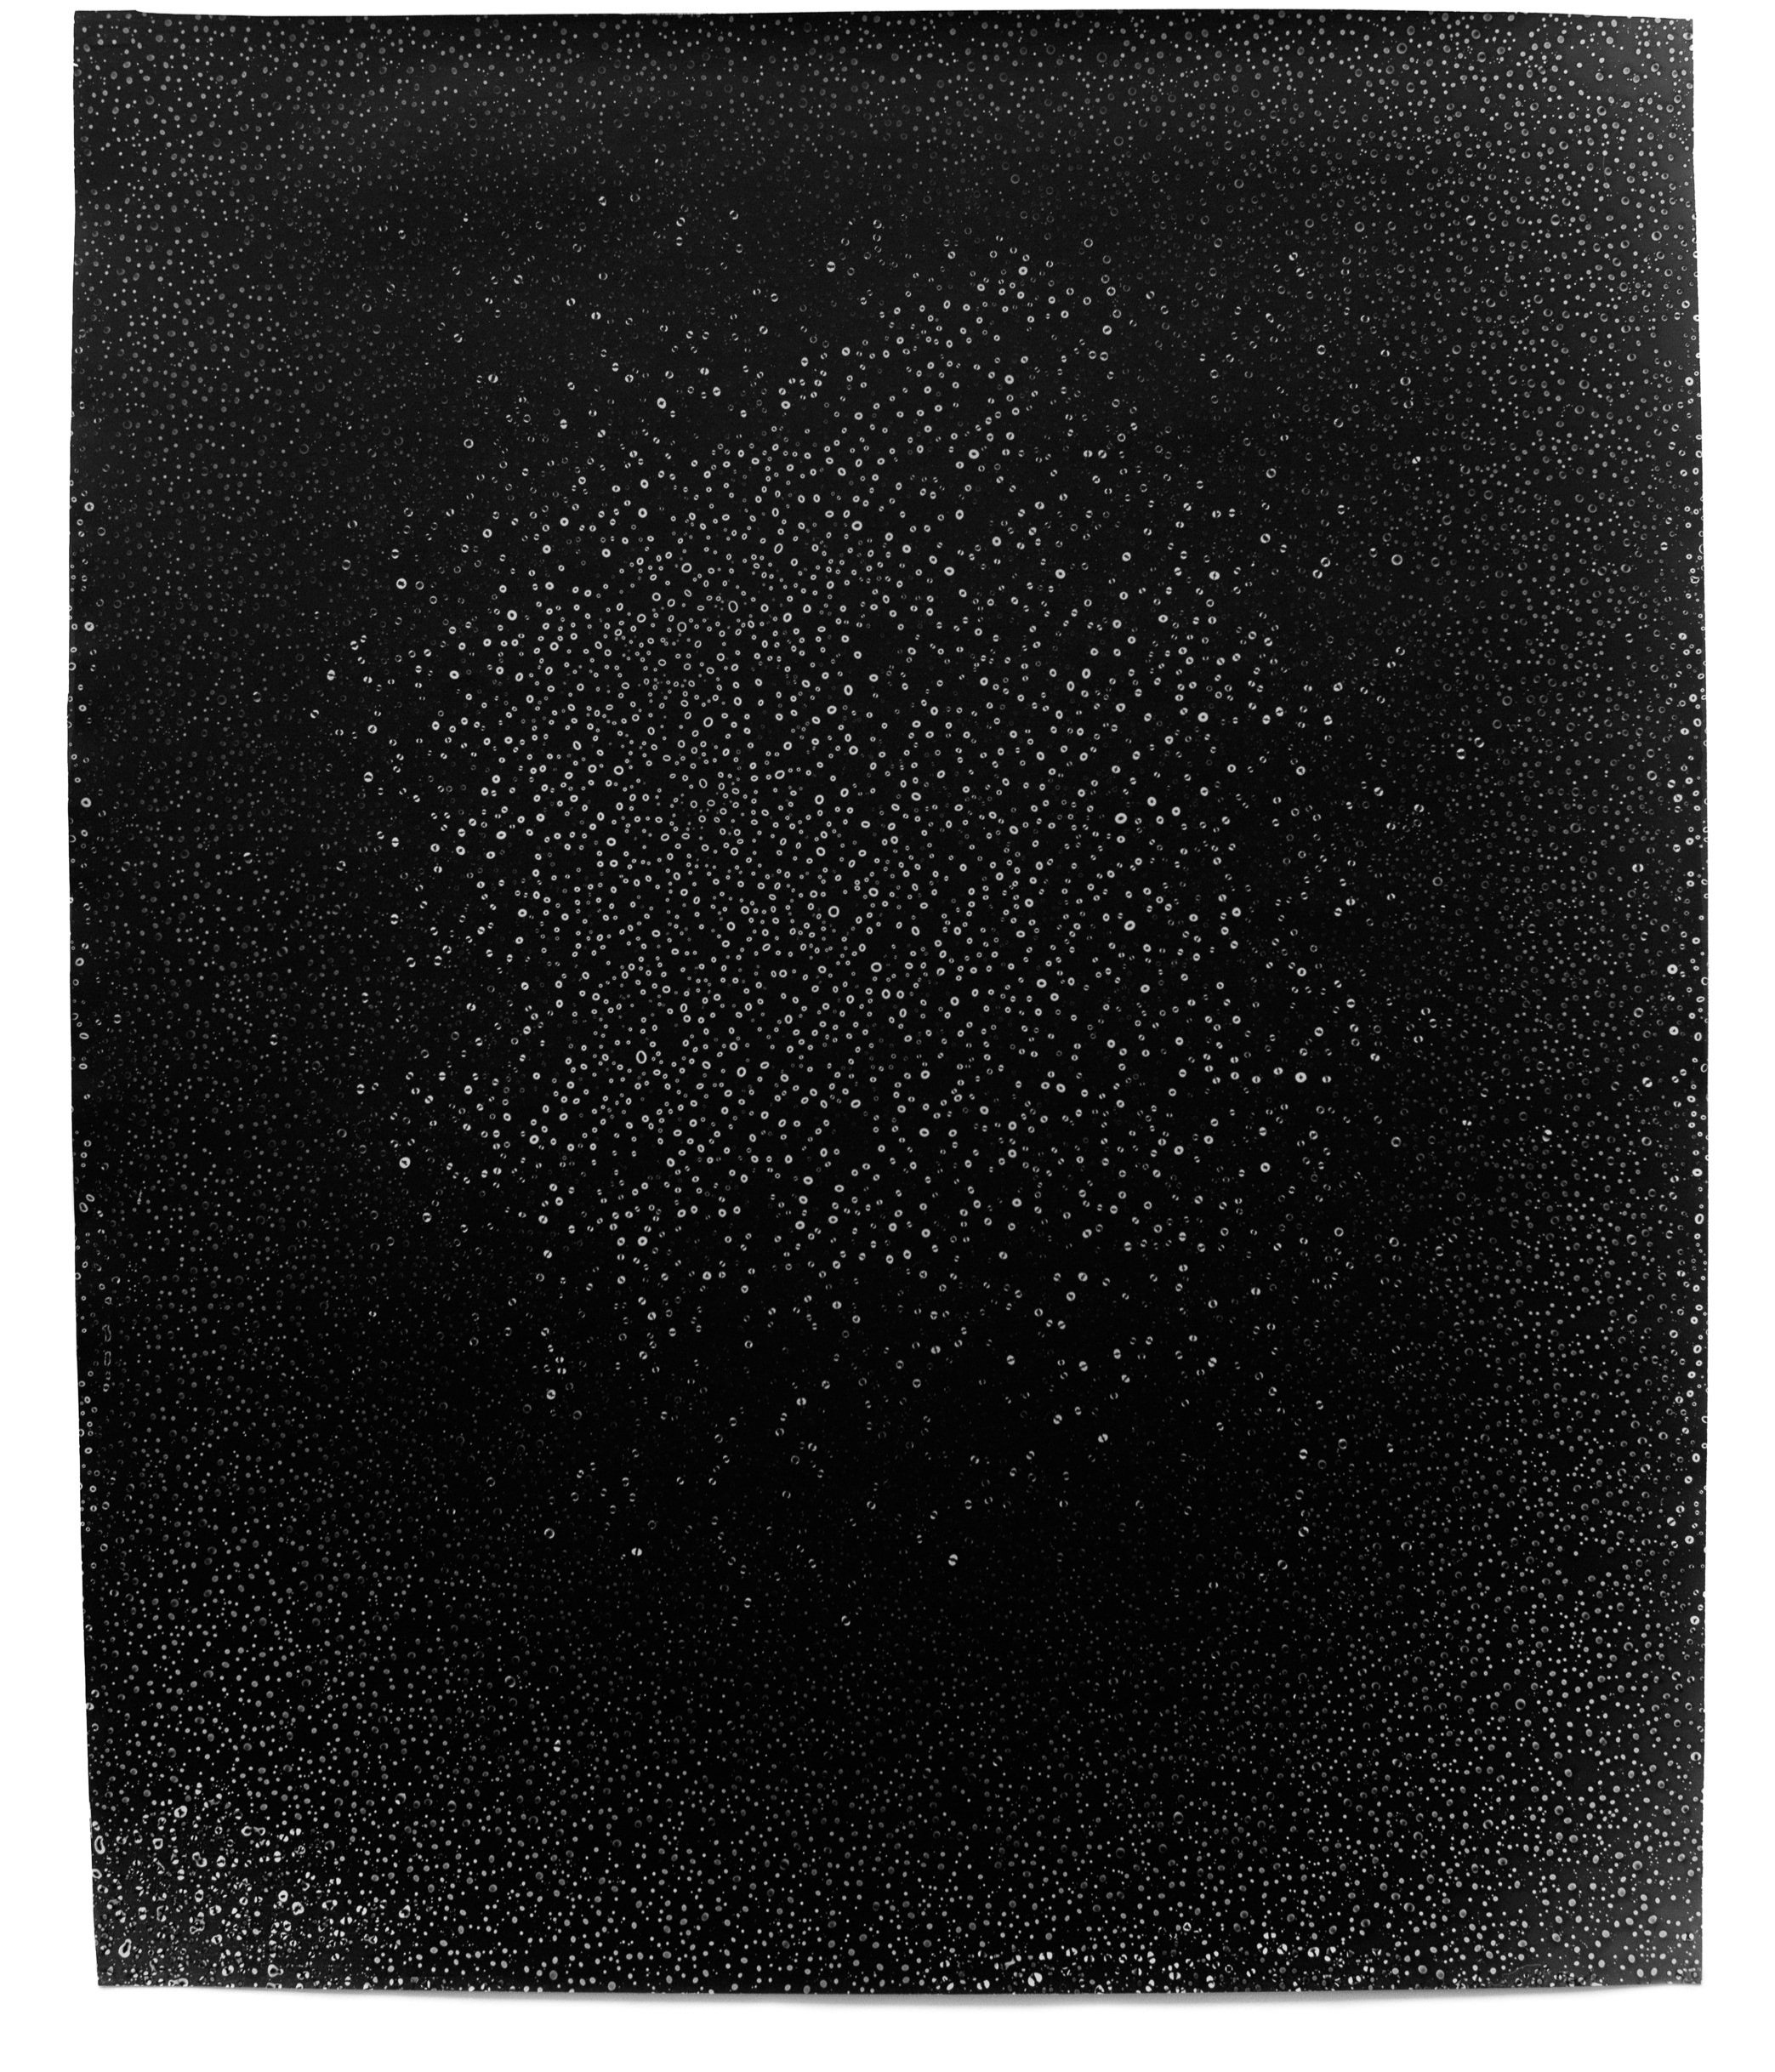   Rainstorm 15,  2015 Silver gelatin photogram 42 x 34 in 